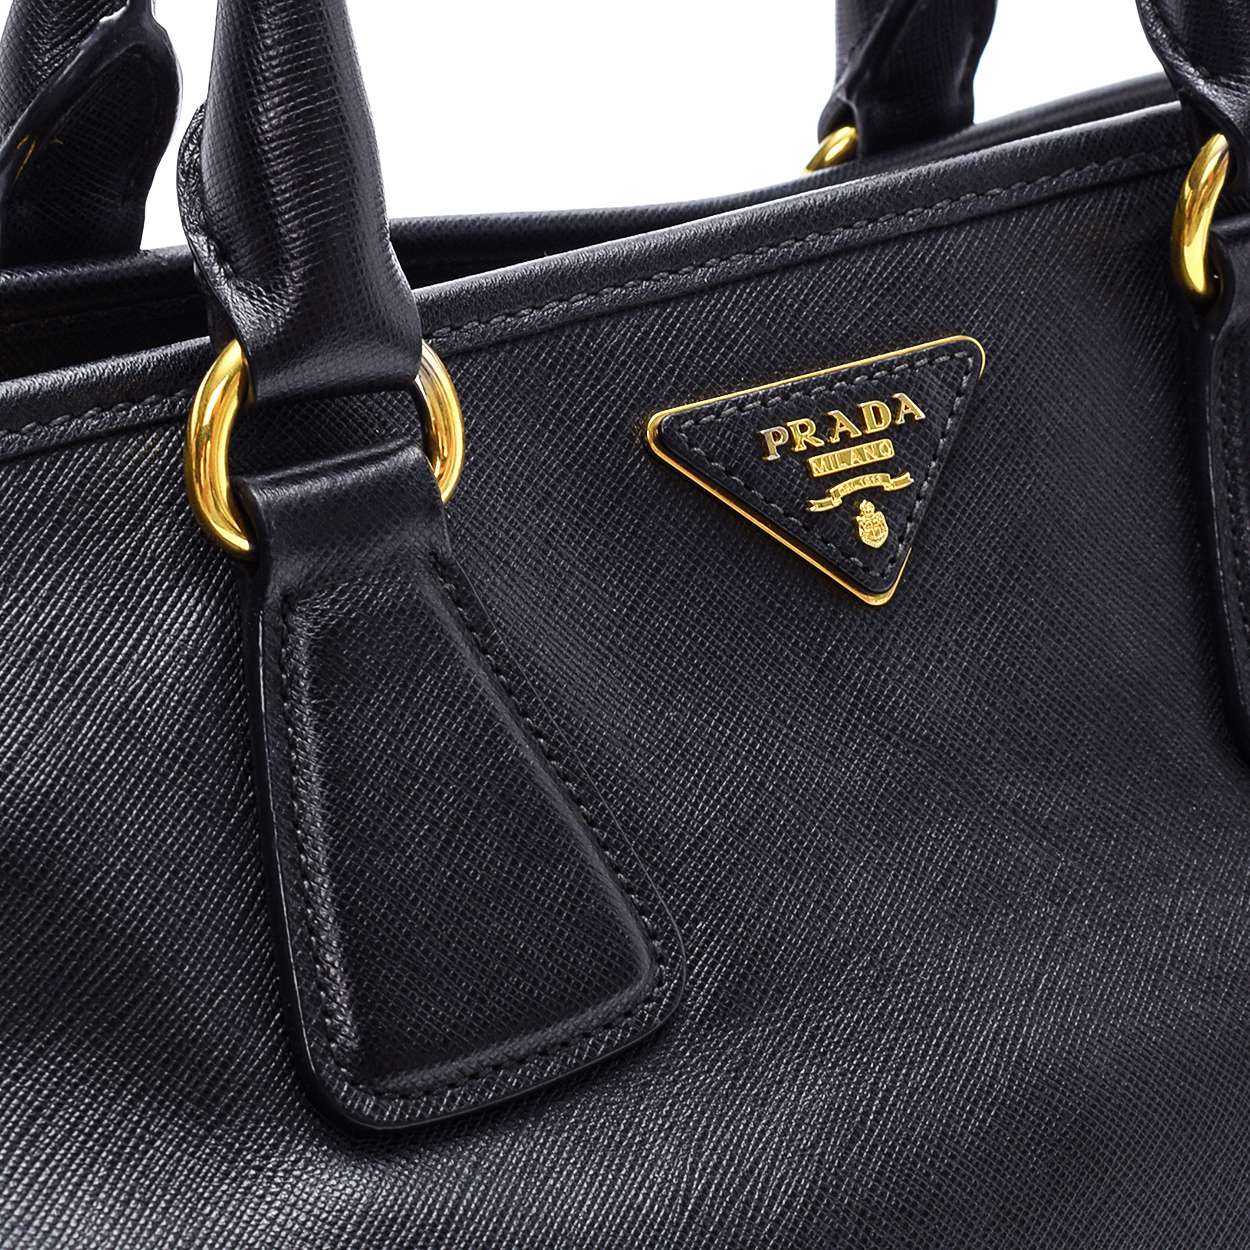 Prada - Black Saffiano Leather Handbag 